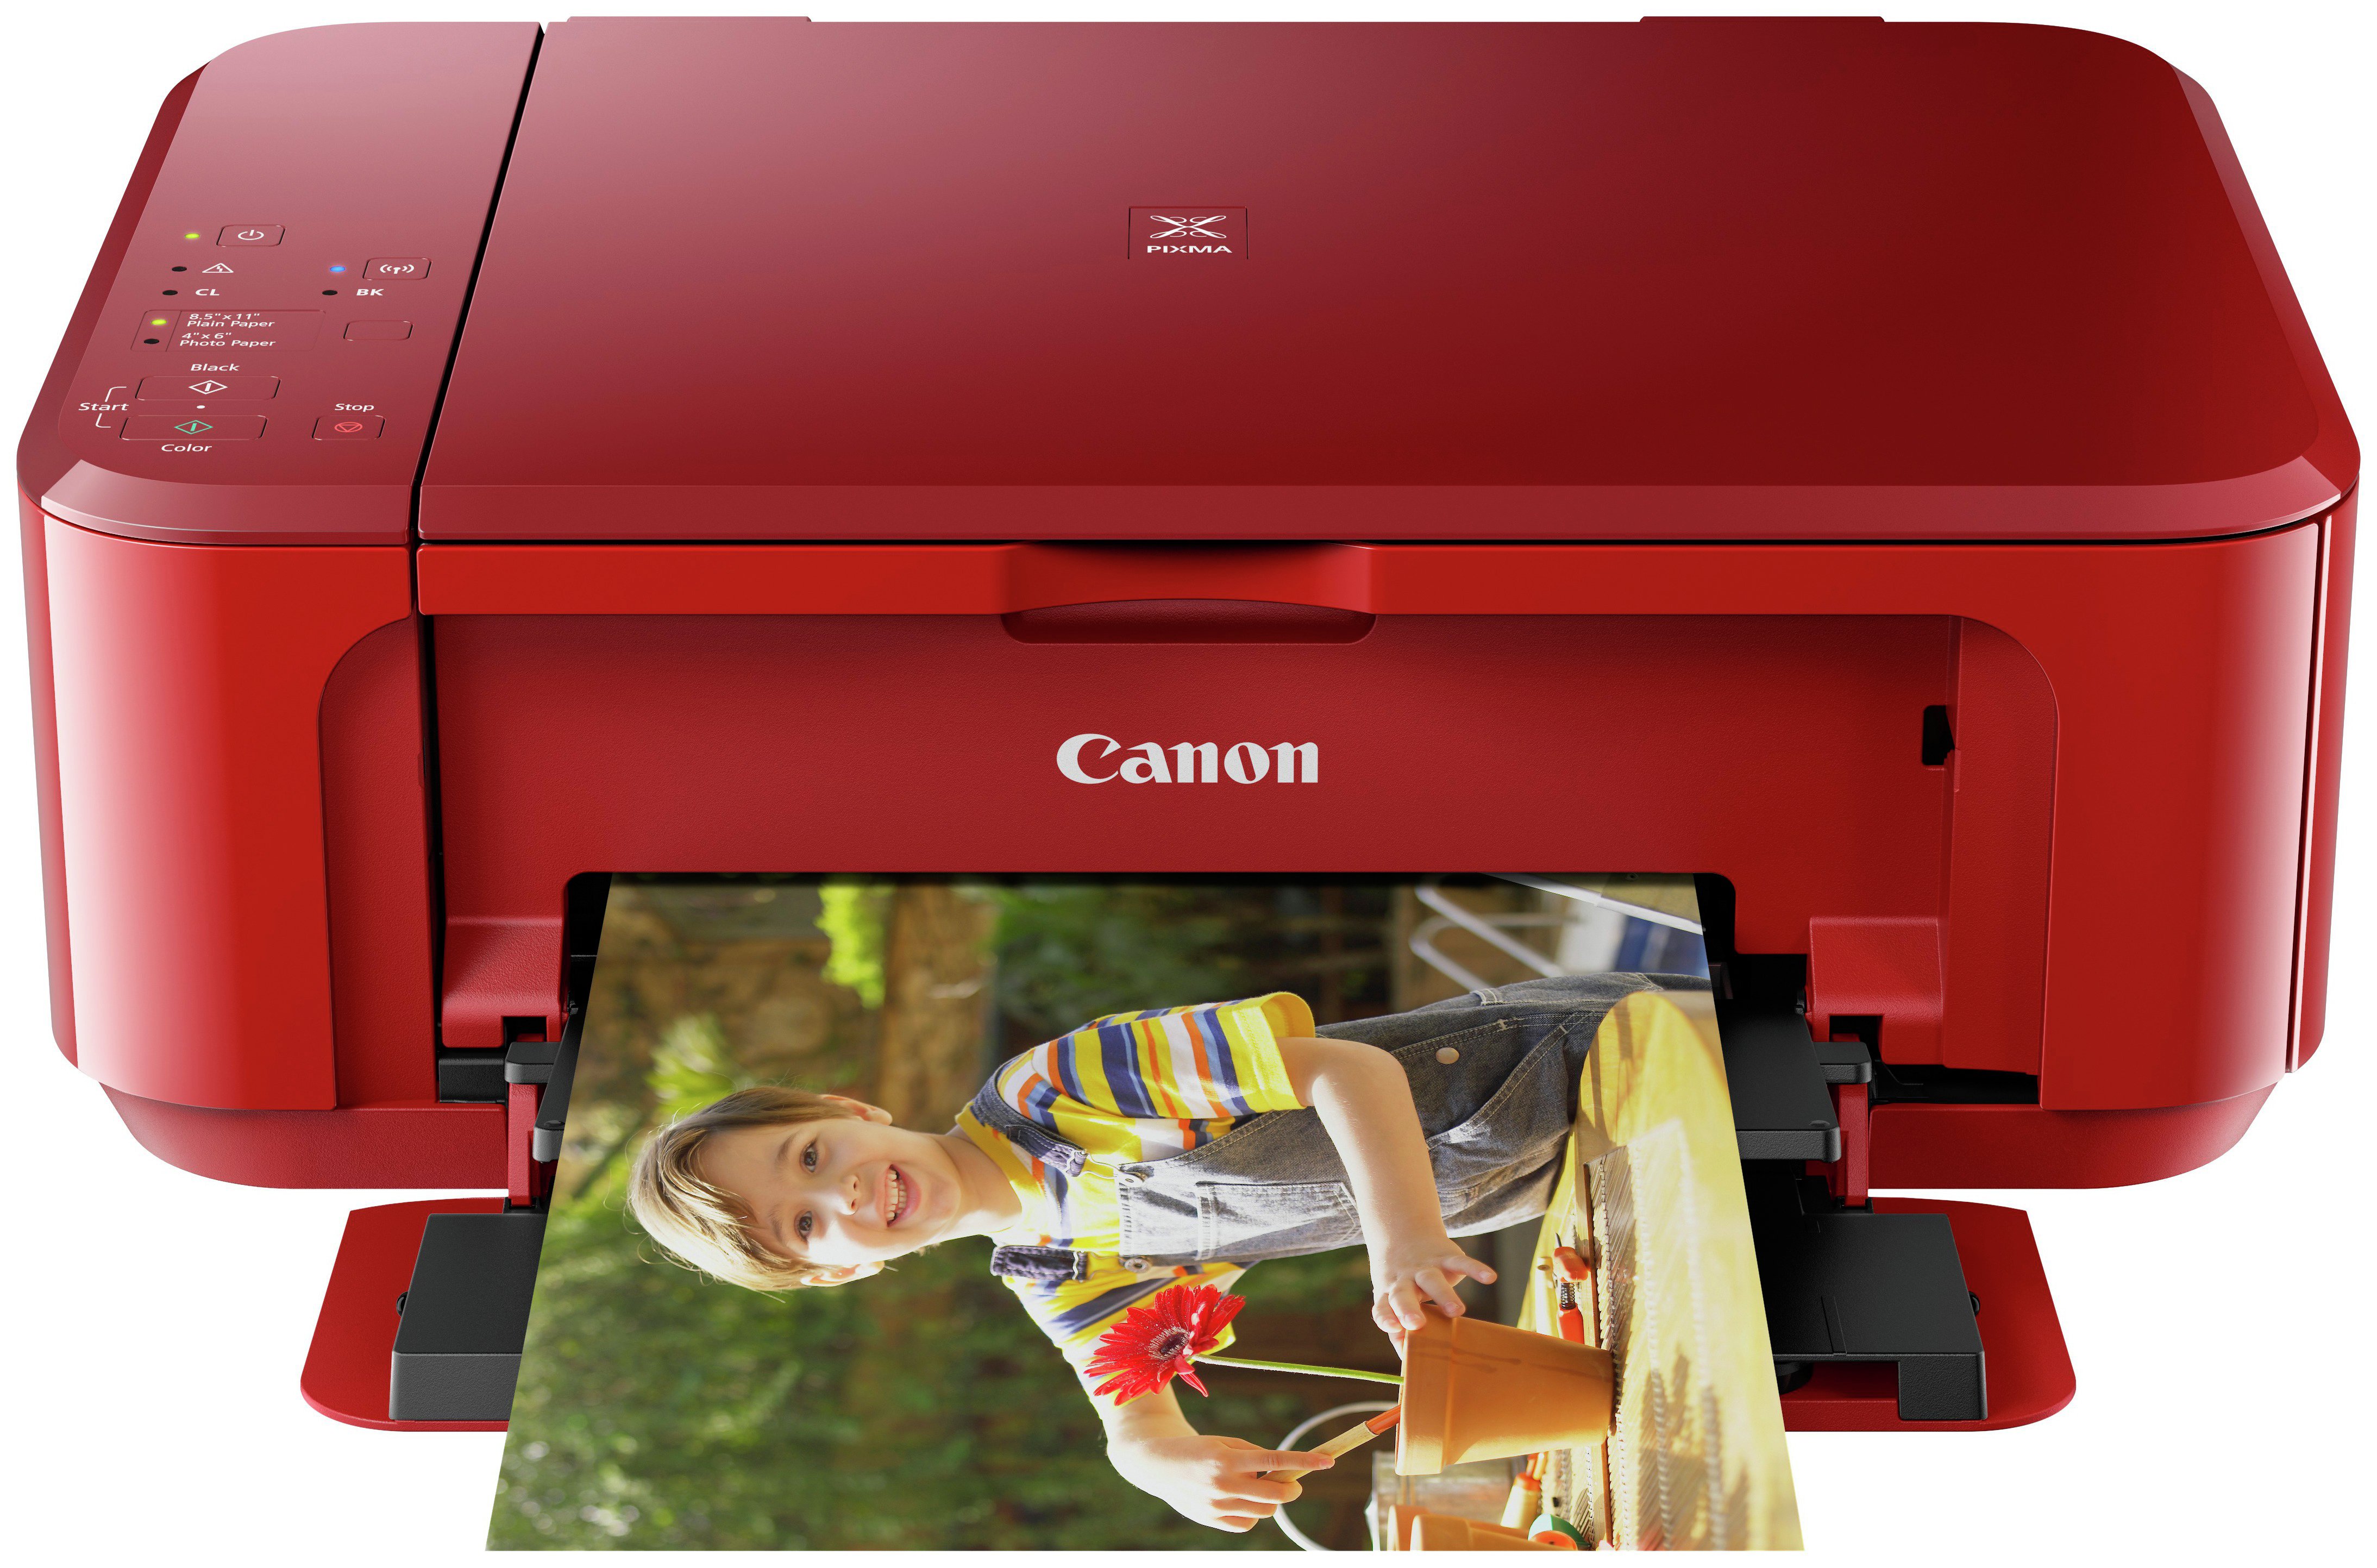 Canon PIXMA MG3650 Wireless All-in-One Colour Printer review